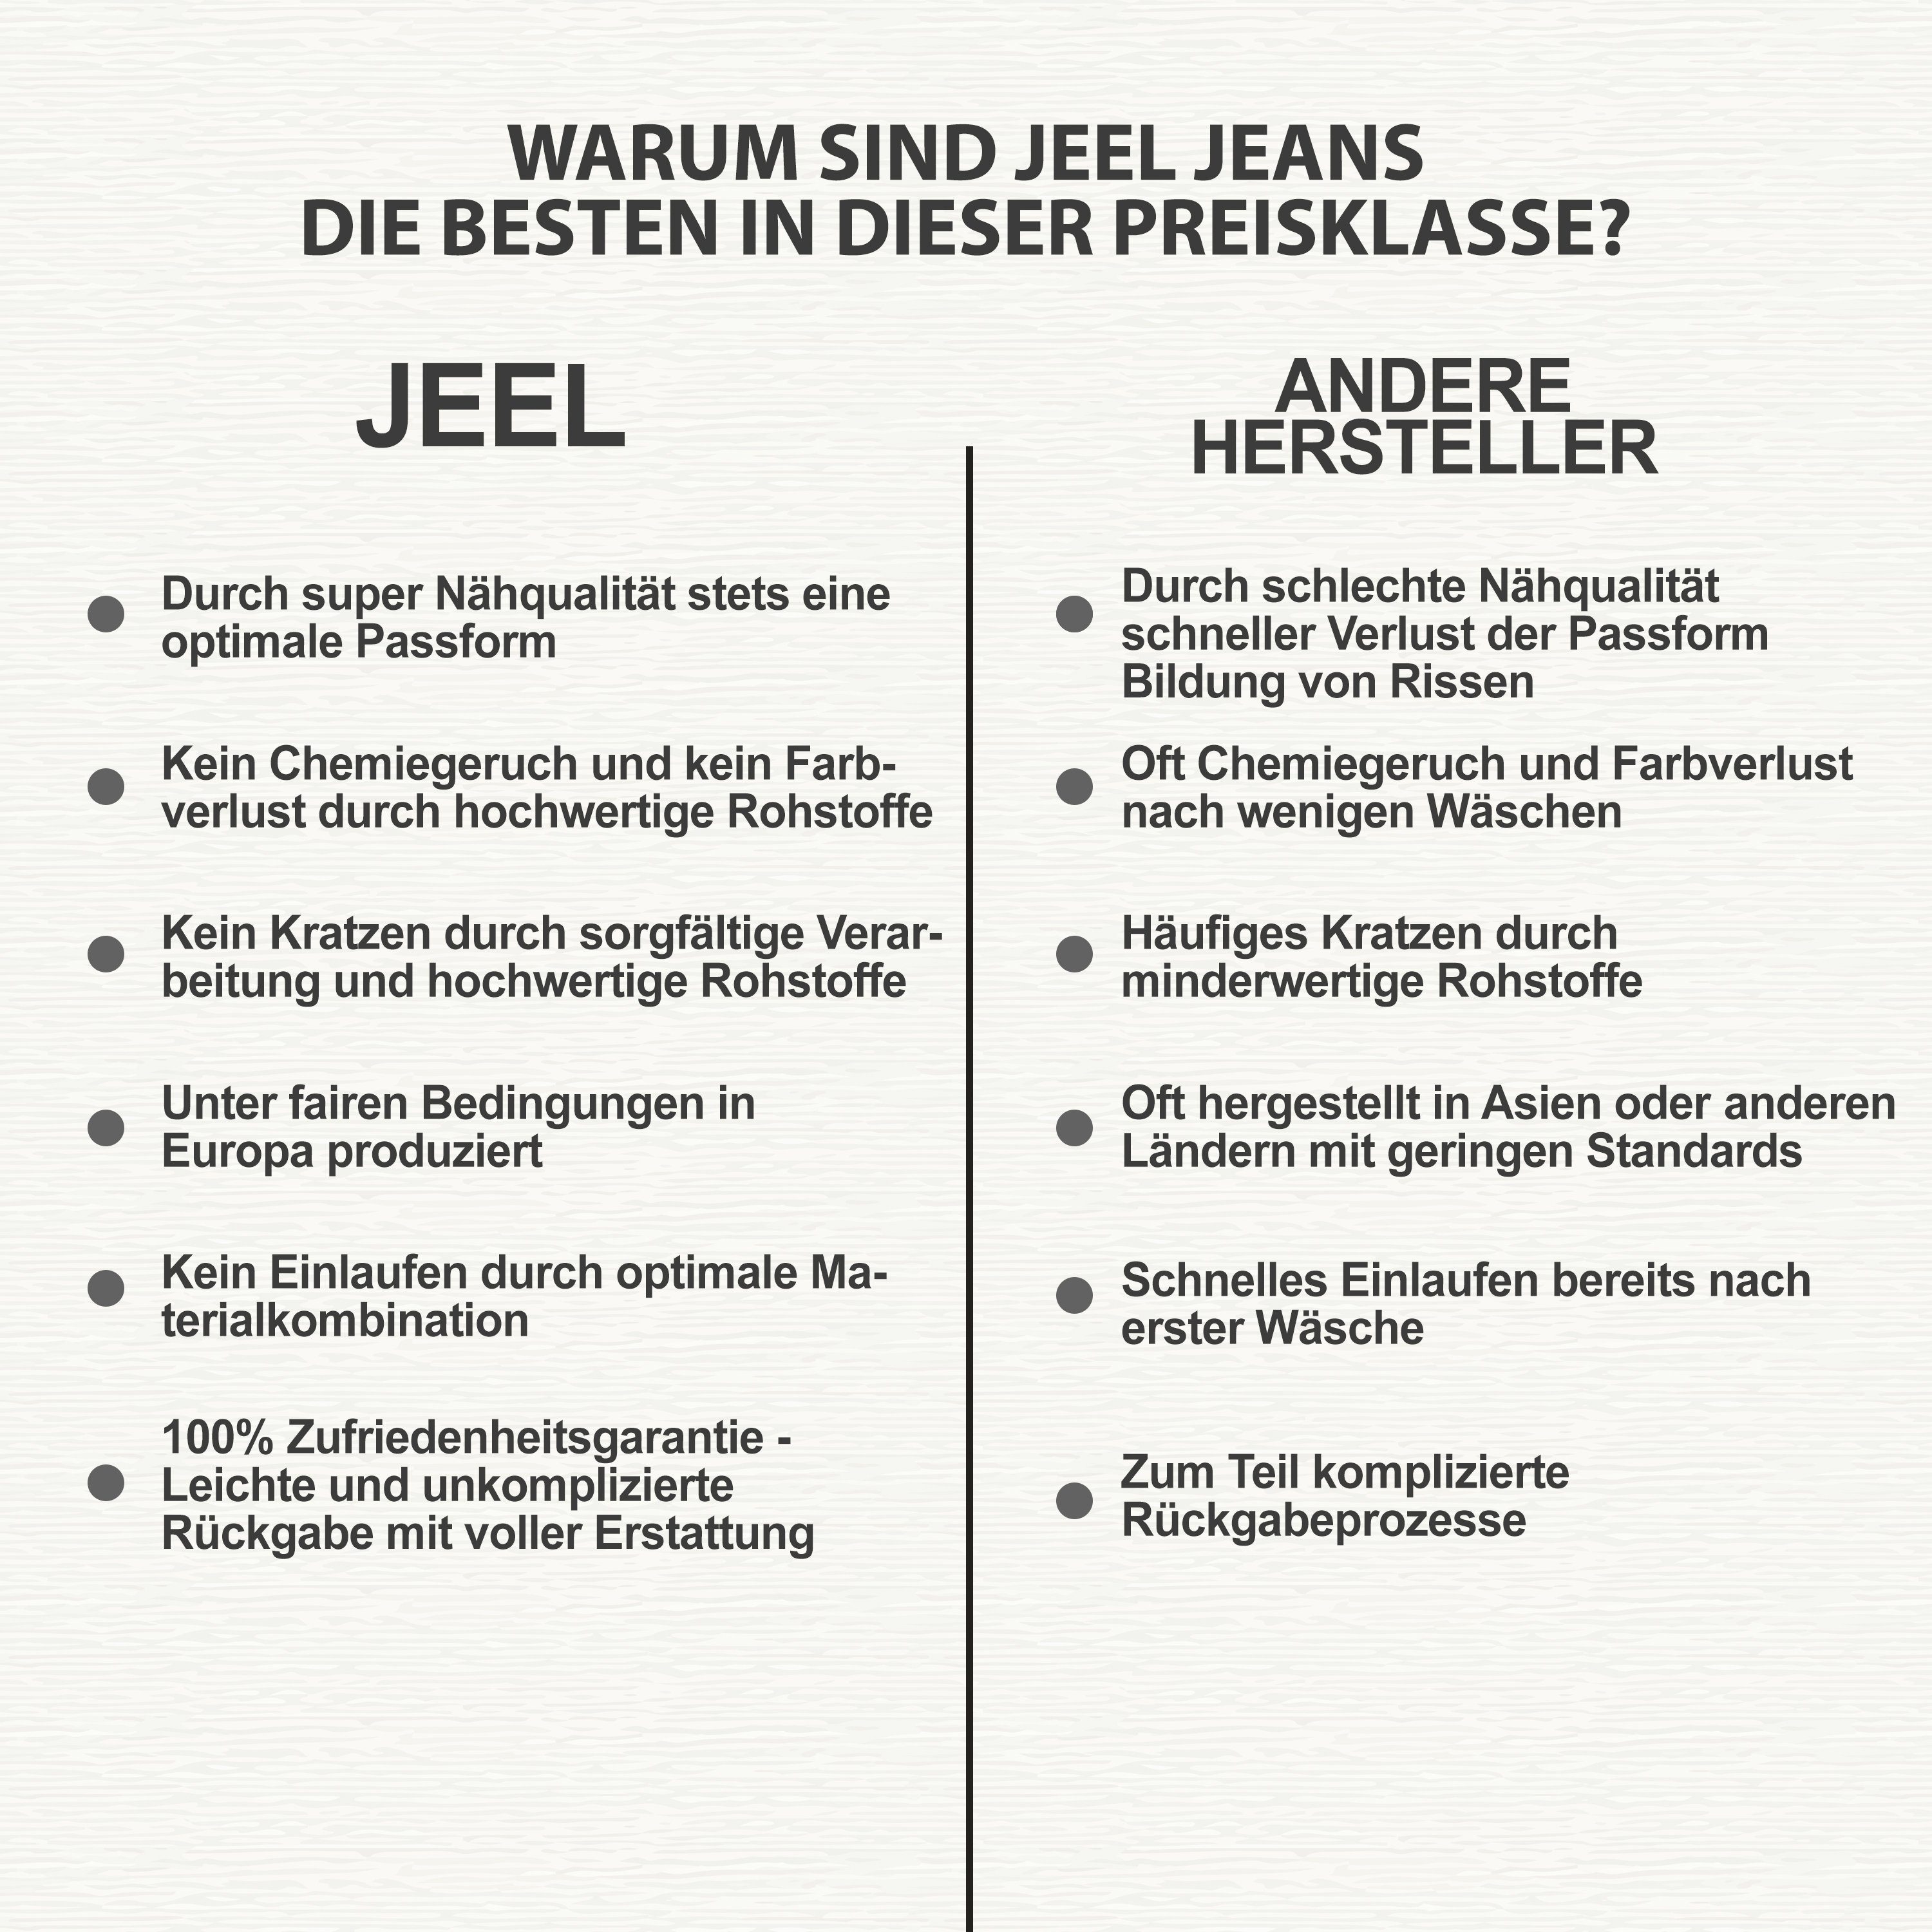 JEEL Regular-fit-Jeans 305 02-Hellblau Straight Cut Jeans 5-Pocket Design Herren